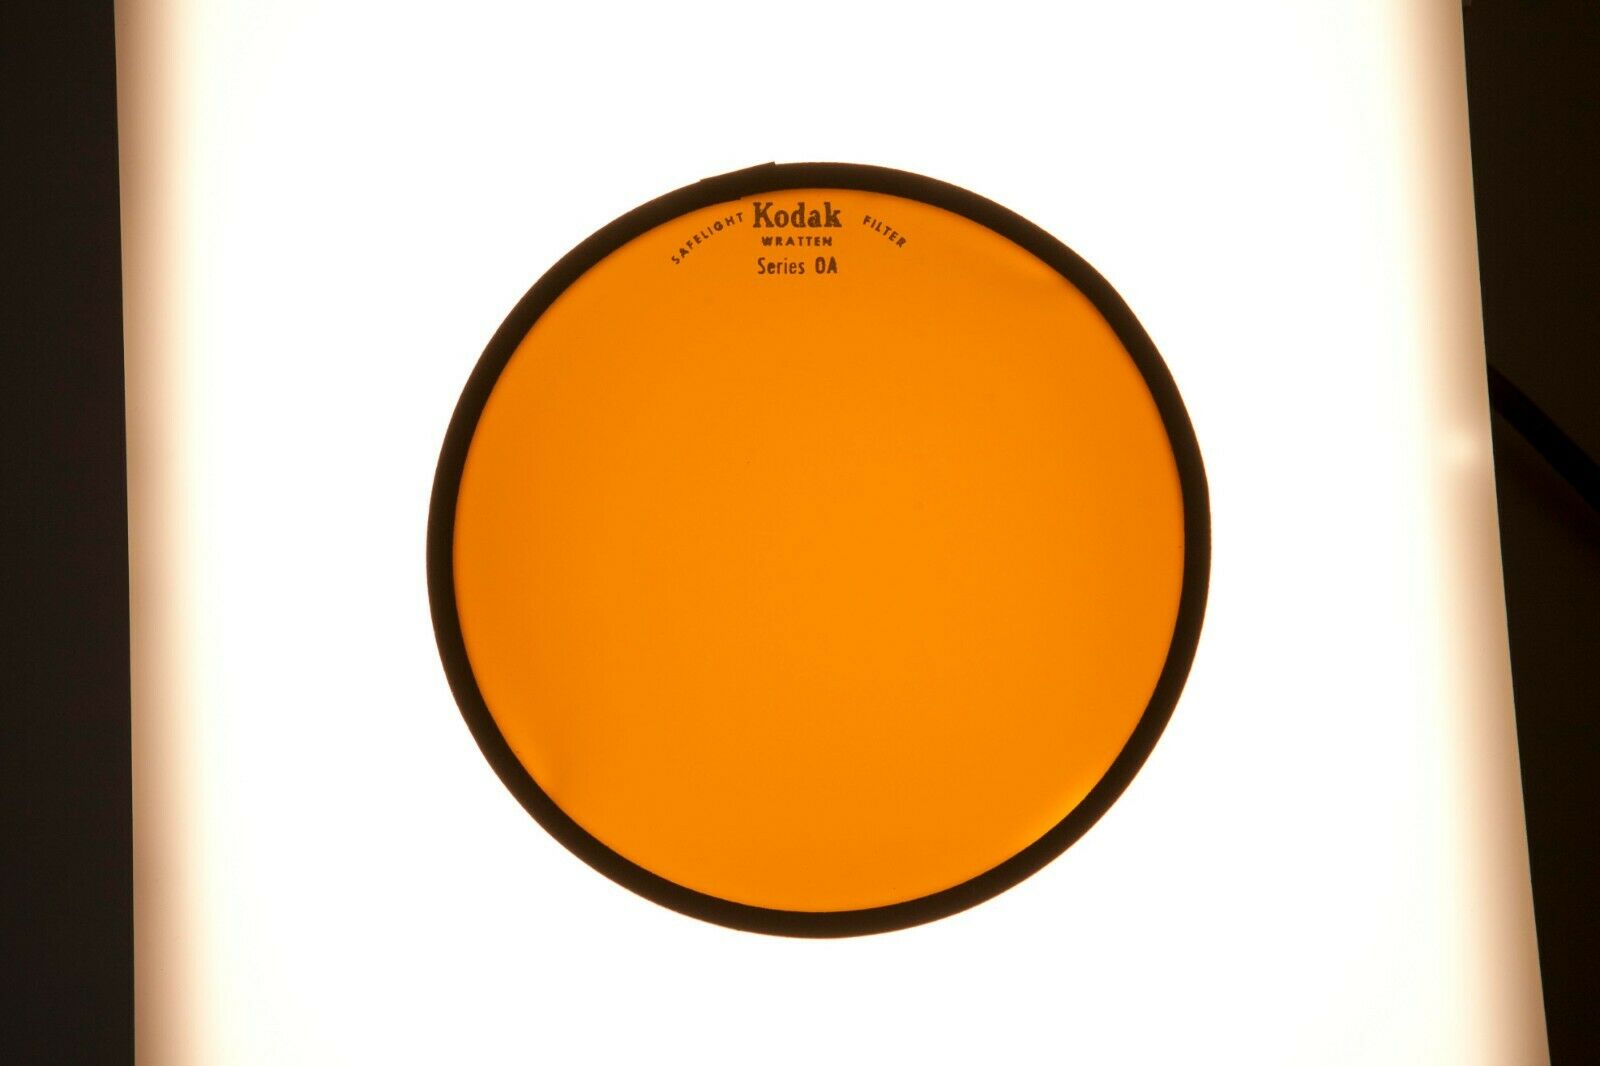 Kodak 5.5" Orange Wratten Safeflight Filter Series 0a  For Darkroom